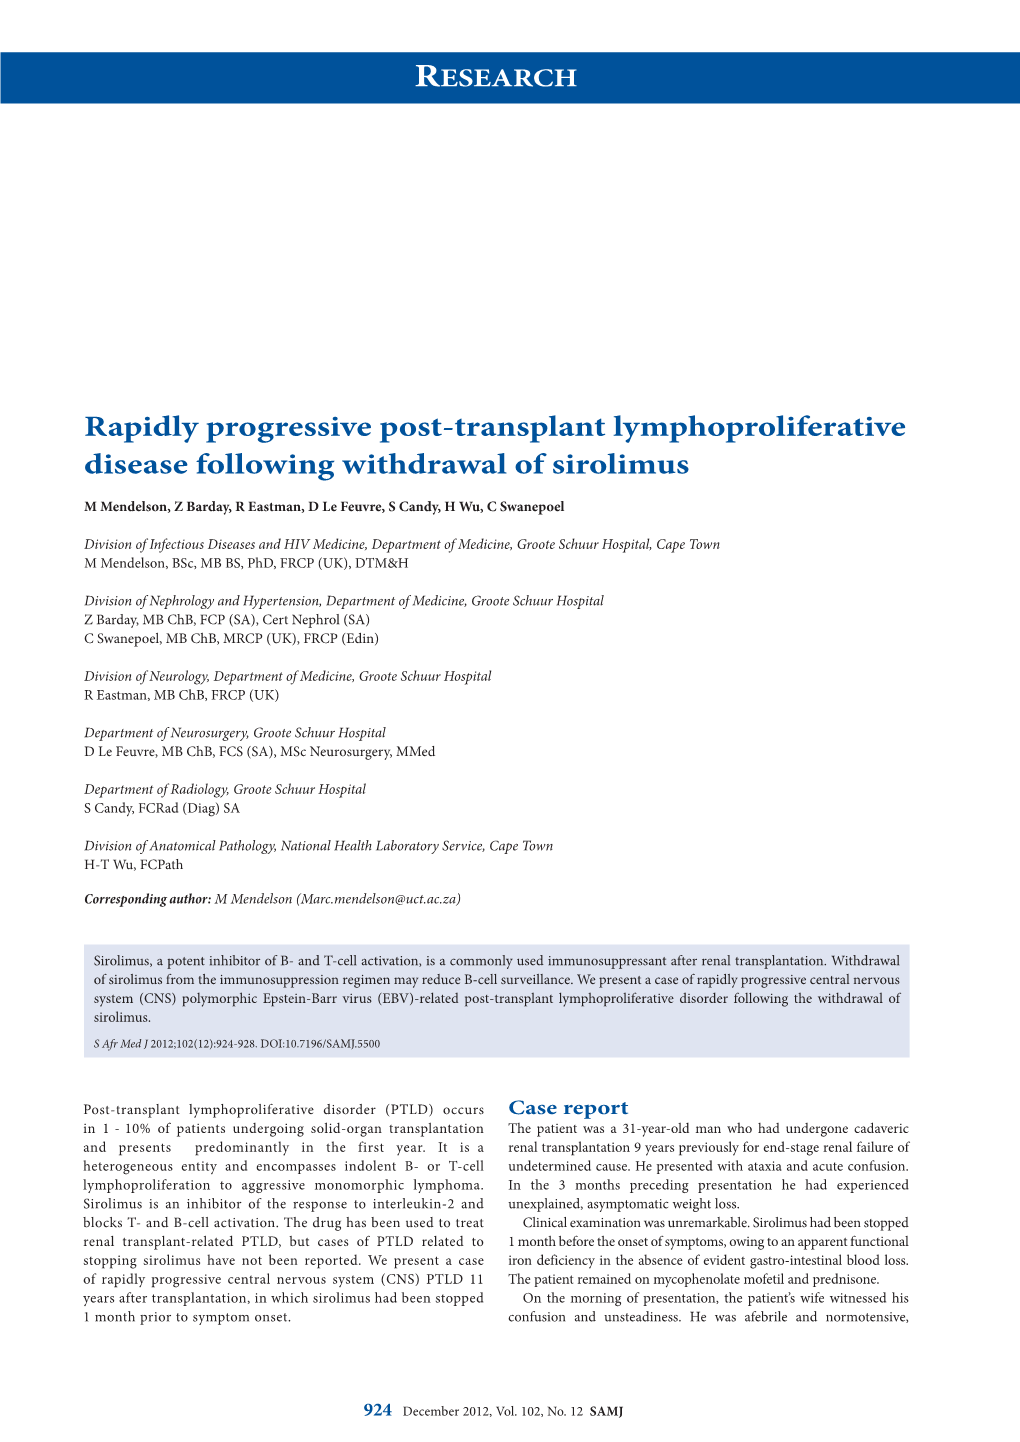 Rapidly Progressive Post-Transplant Lymphoproliferative Disease Following Withdrawal of Sirolimus